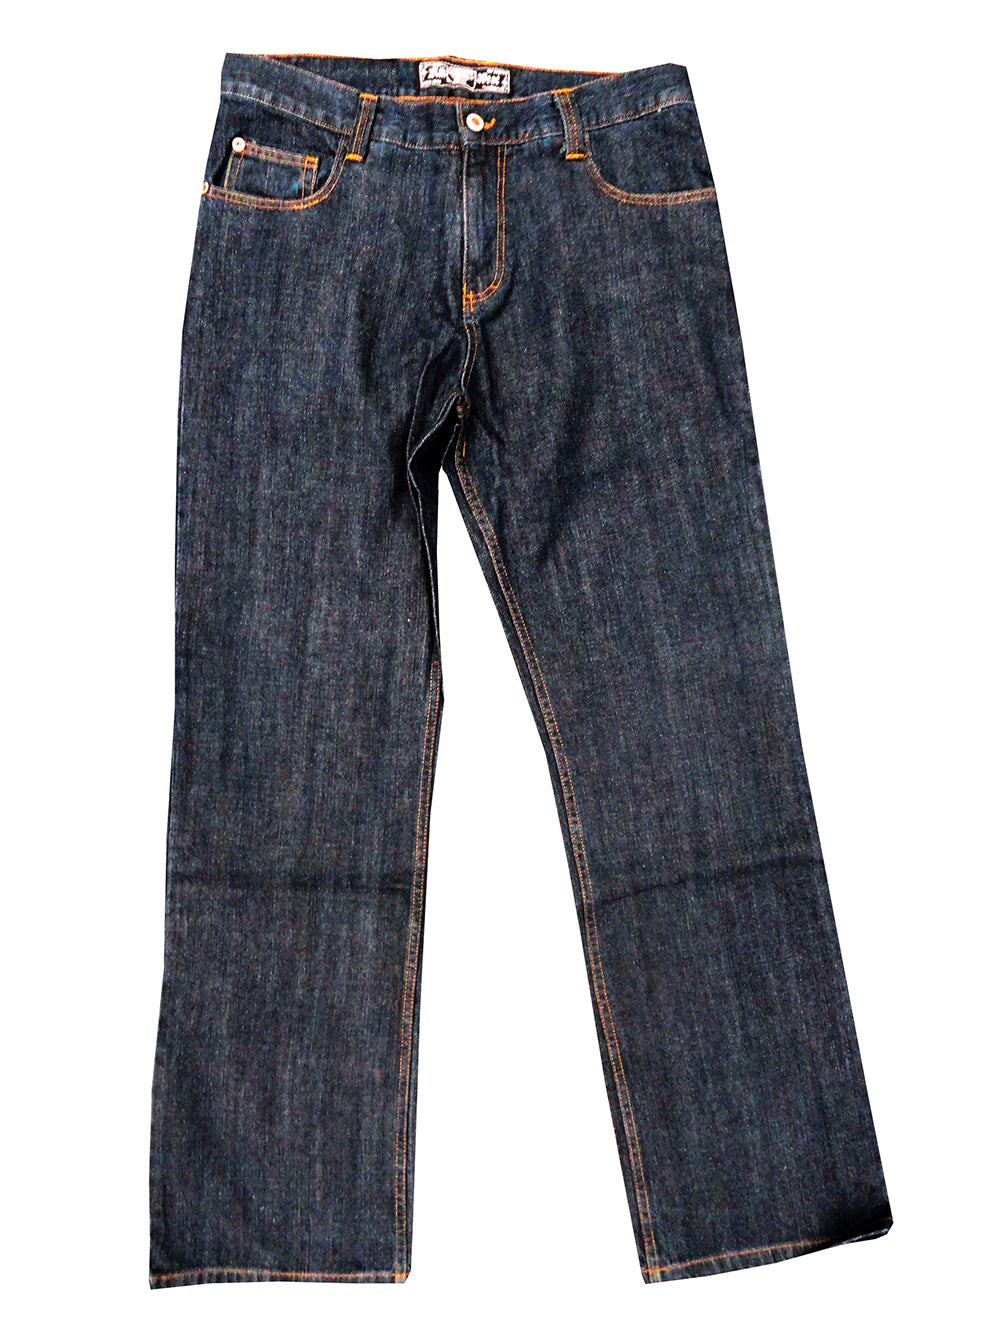 Kikwear Blue Denim Epik Chillax Pants (20 Inch Bottom) – Bewild